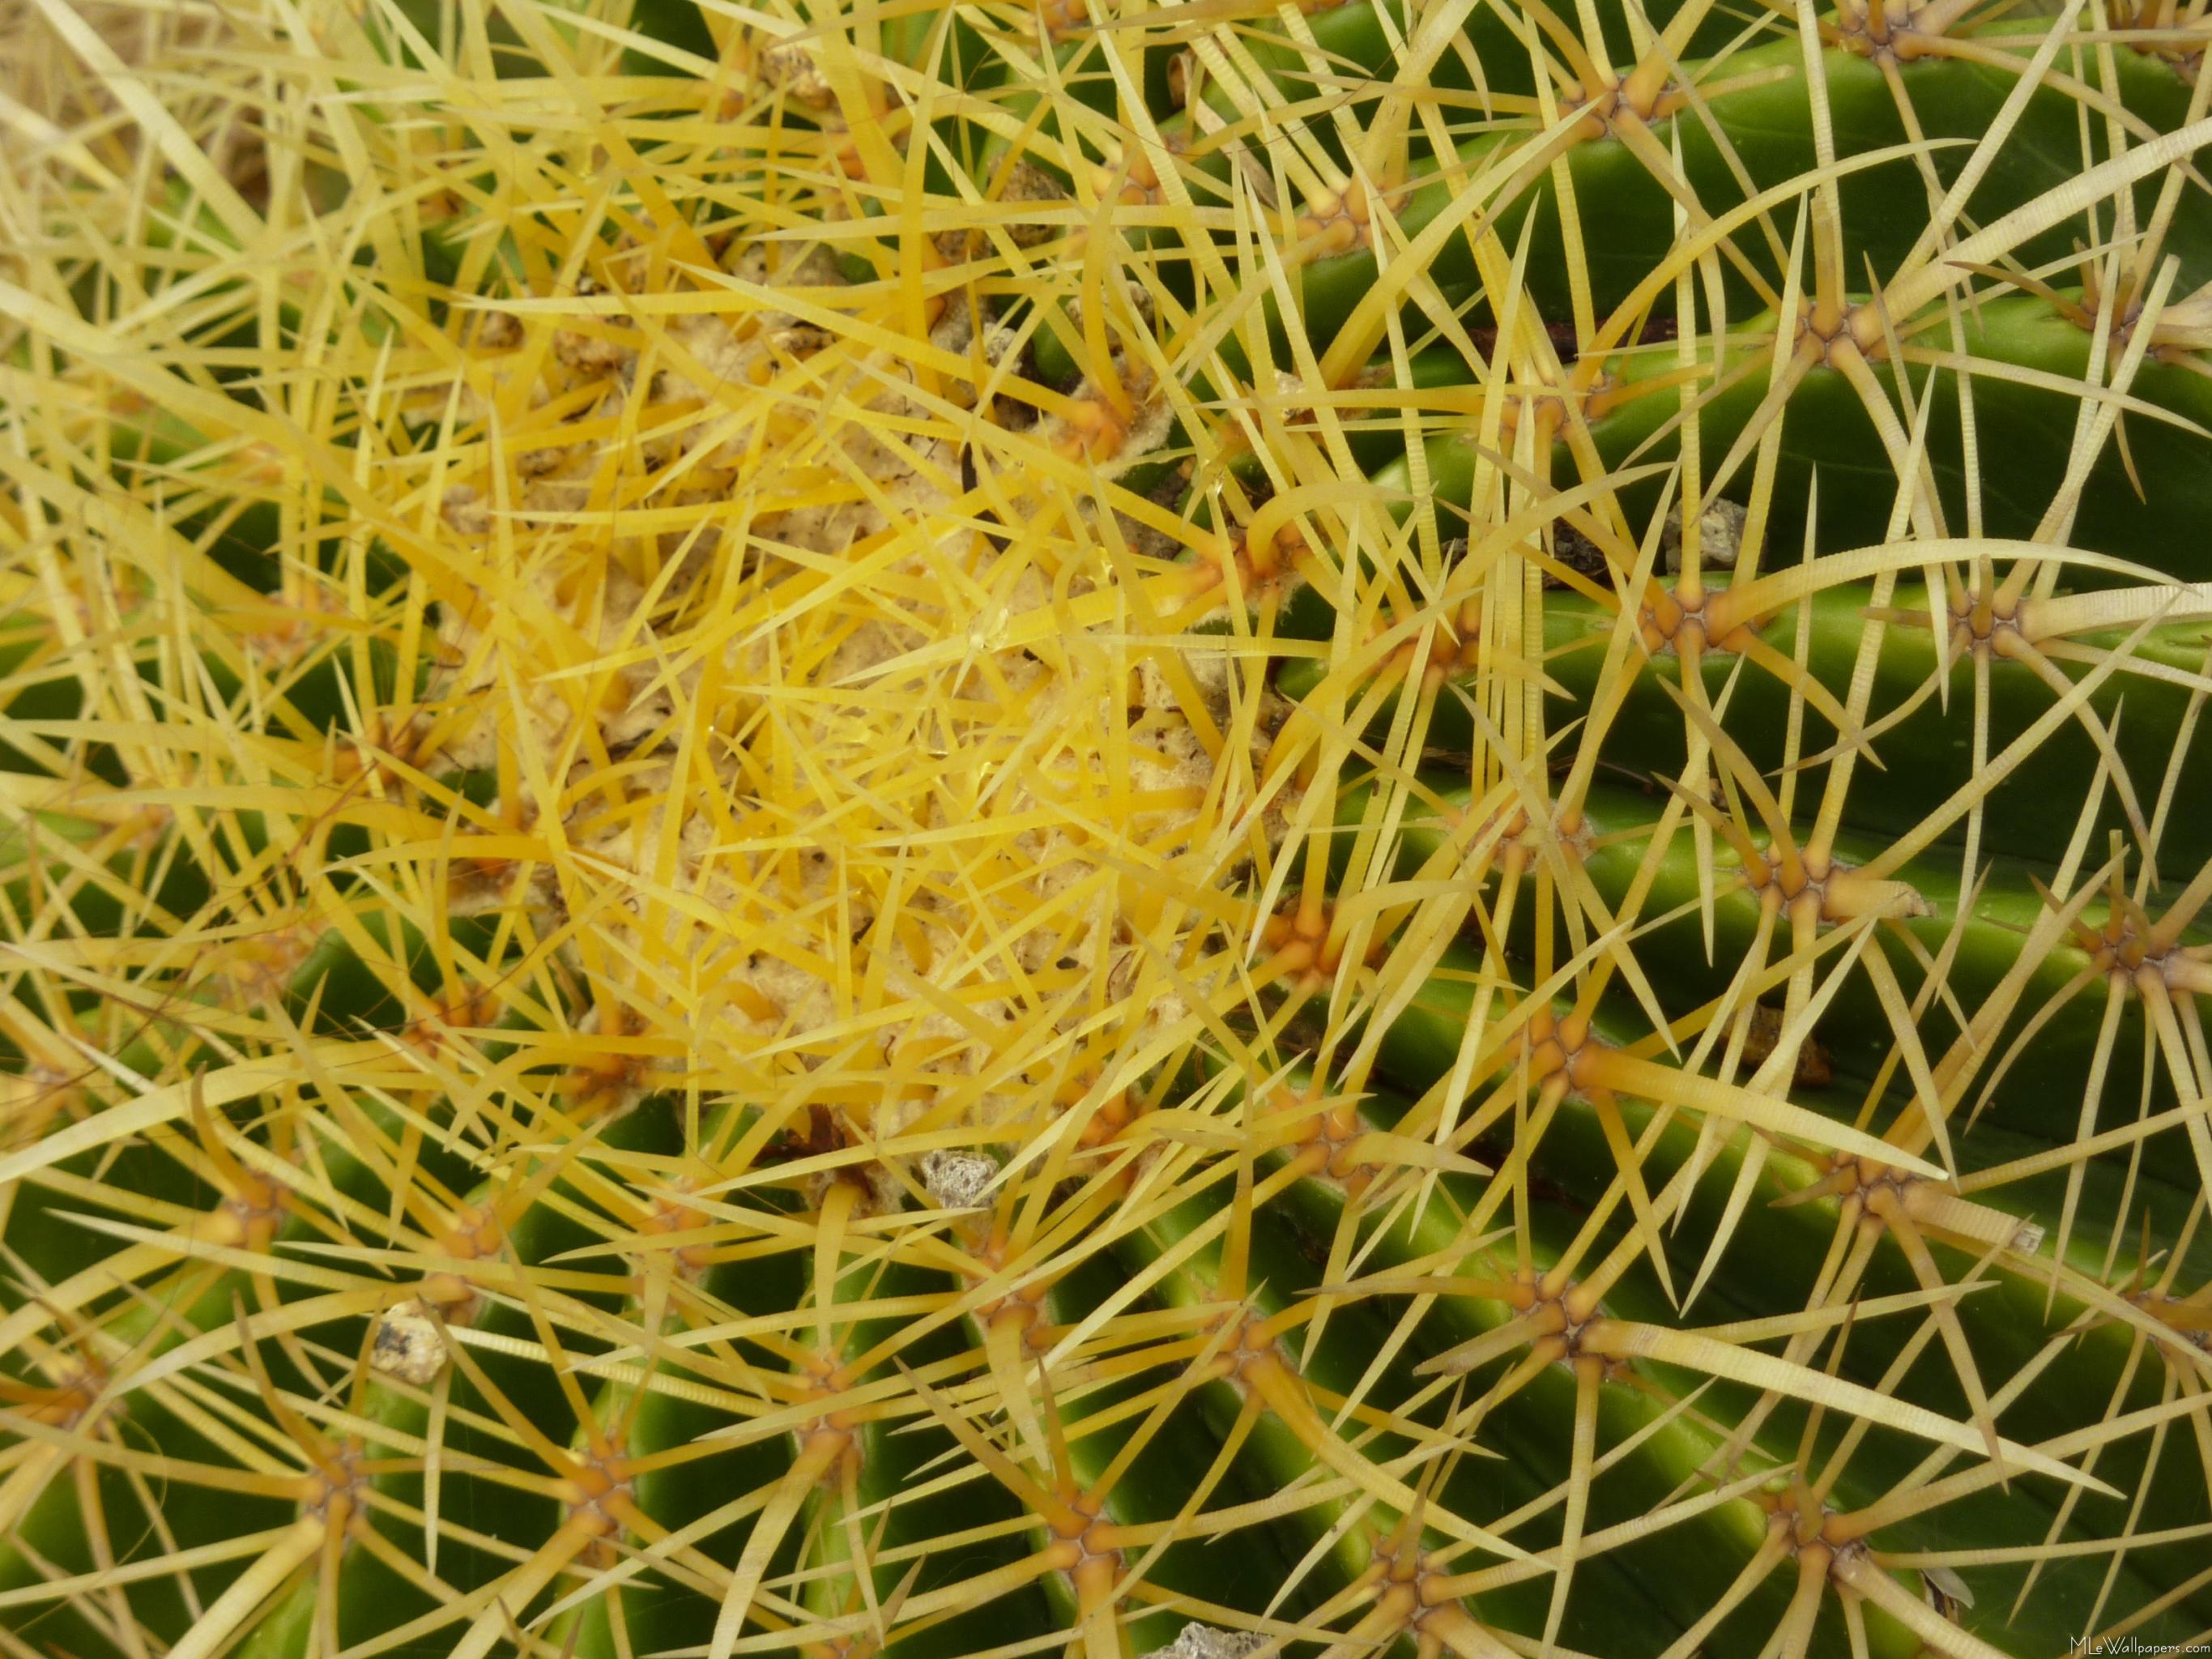 MLeWallpapers.com - Barrel Cactus Closeup